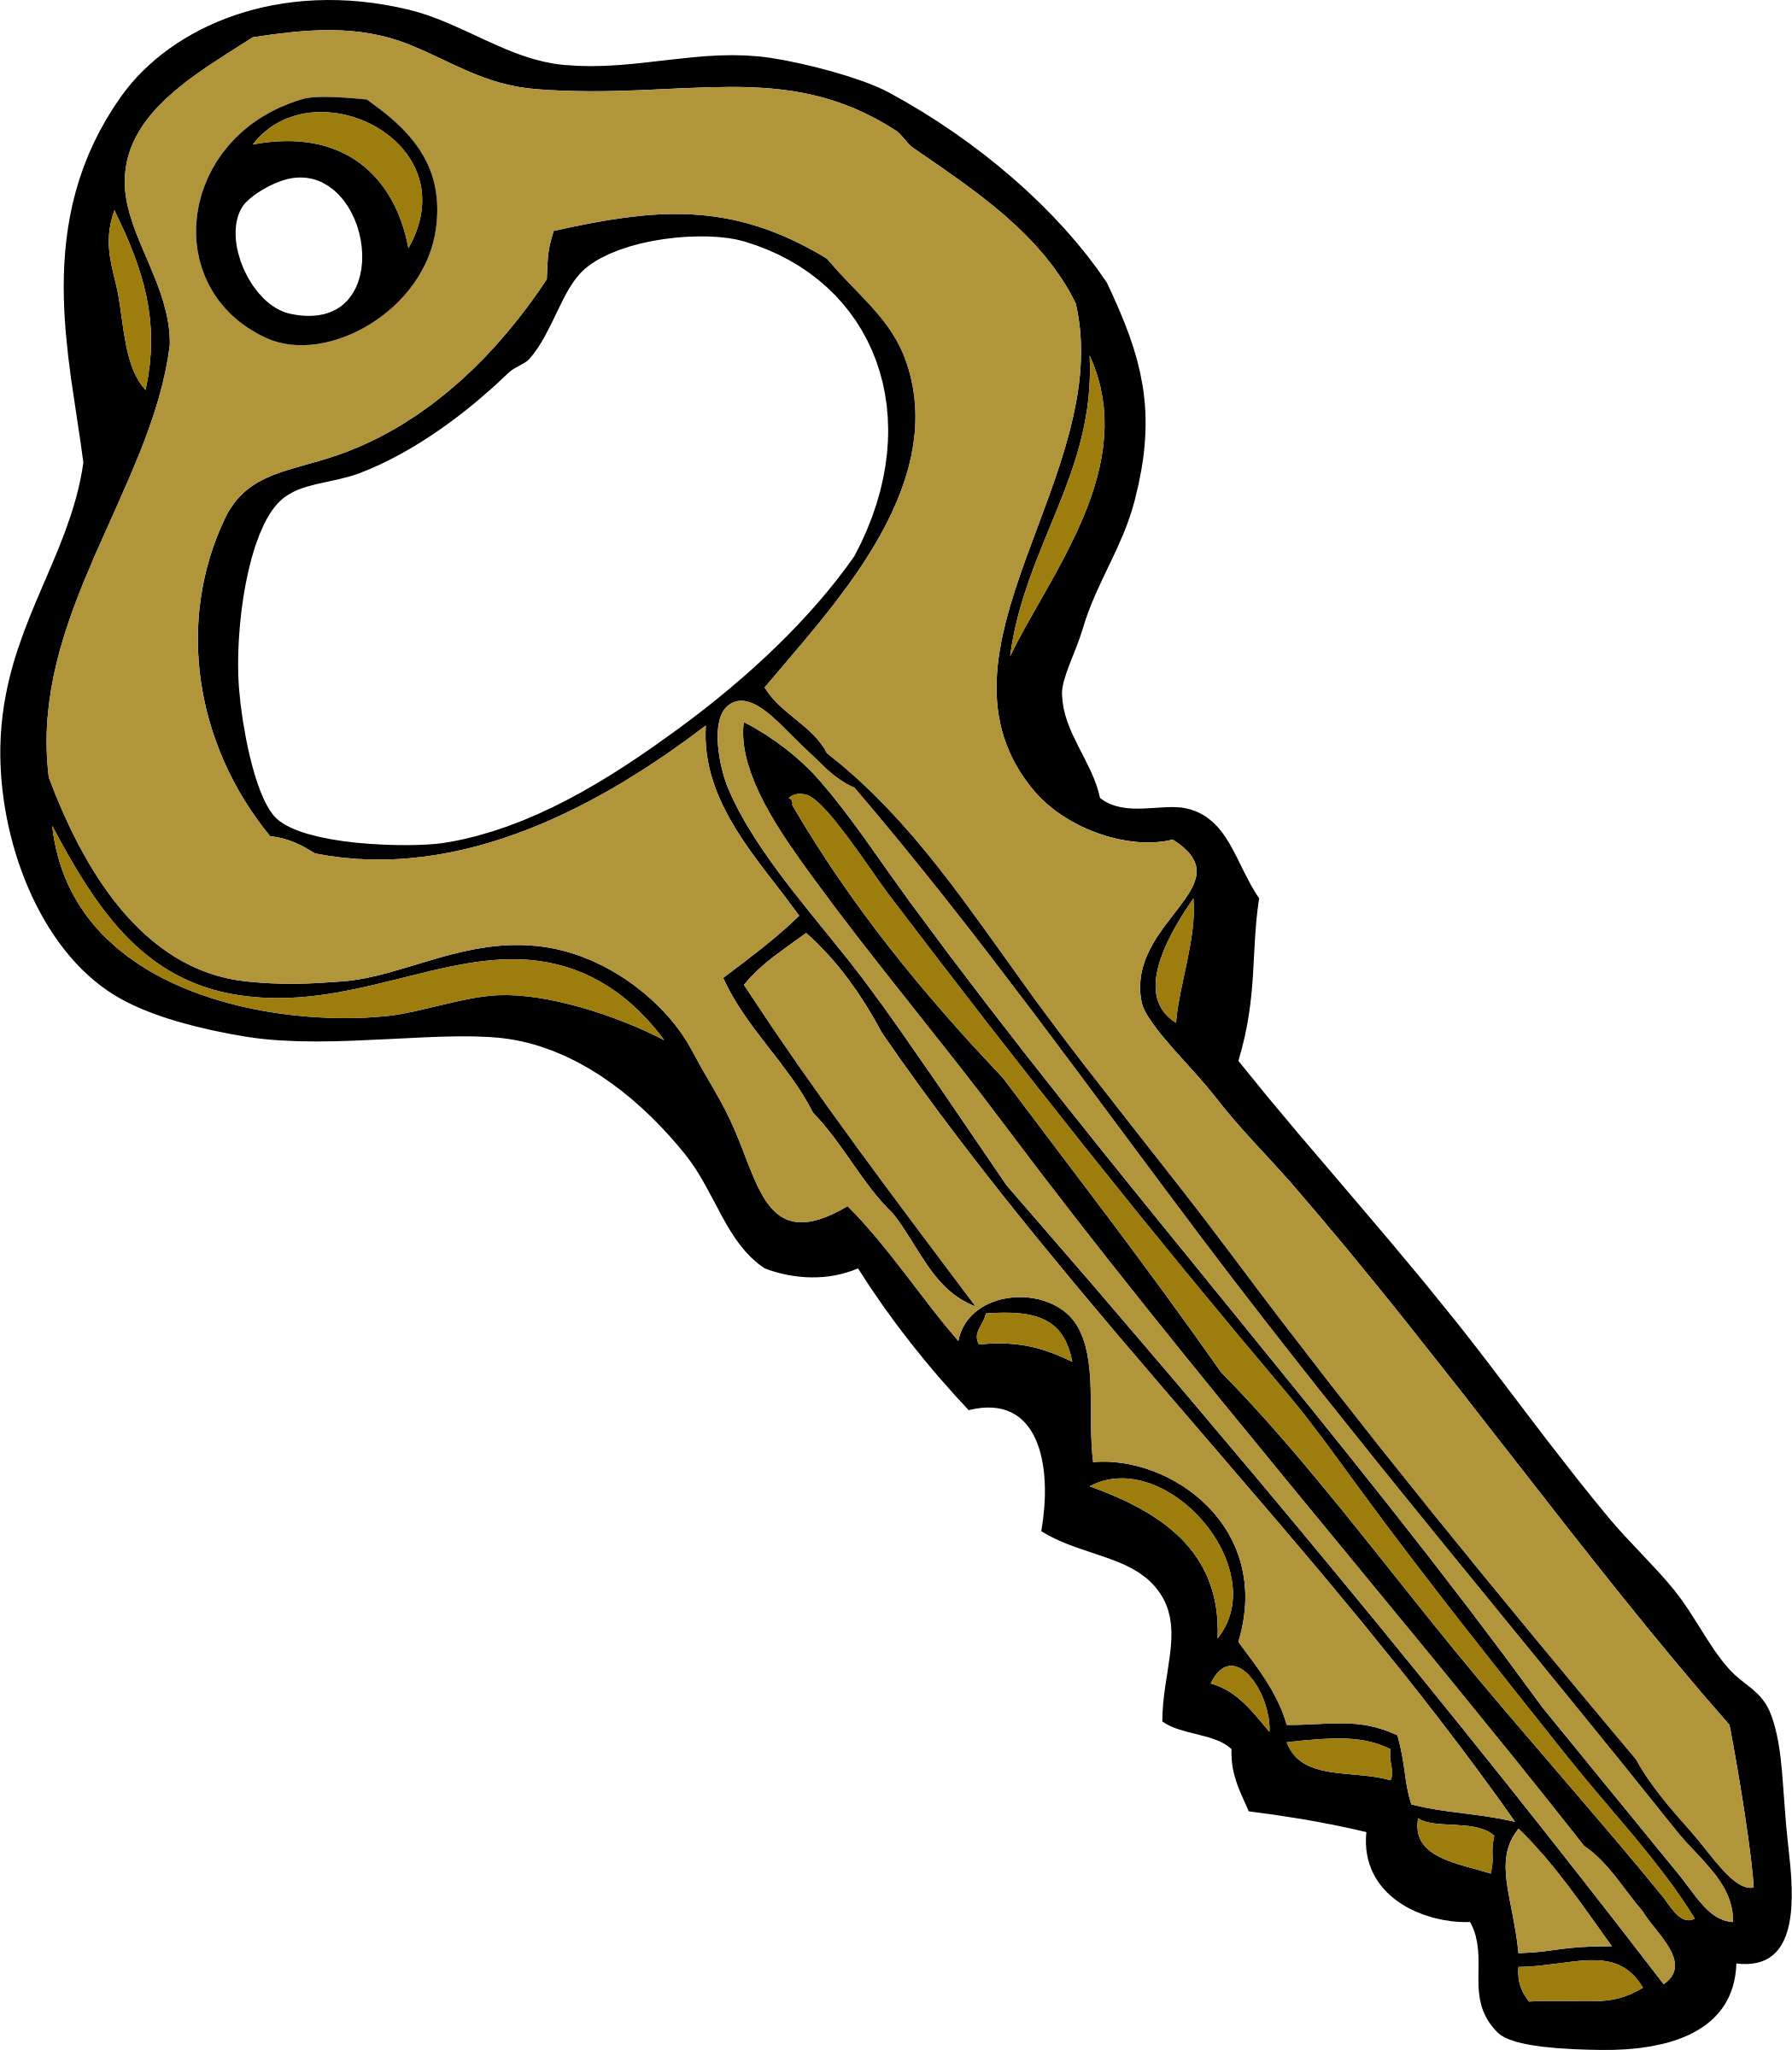 office clipart key